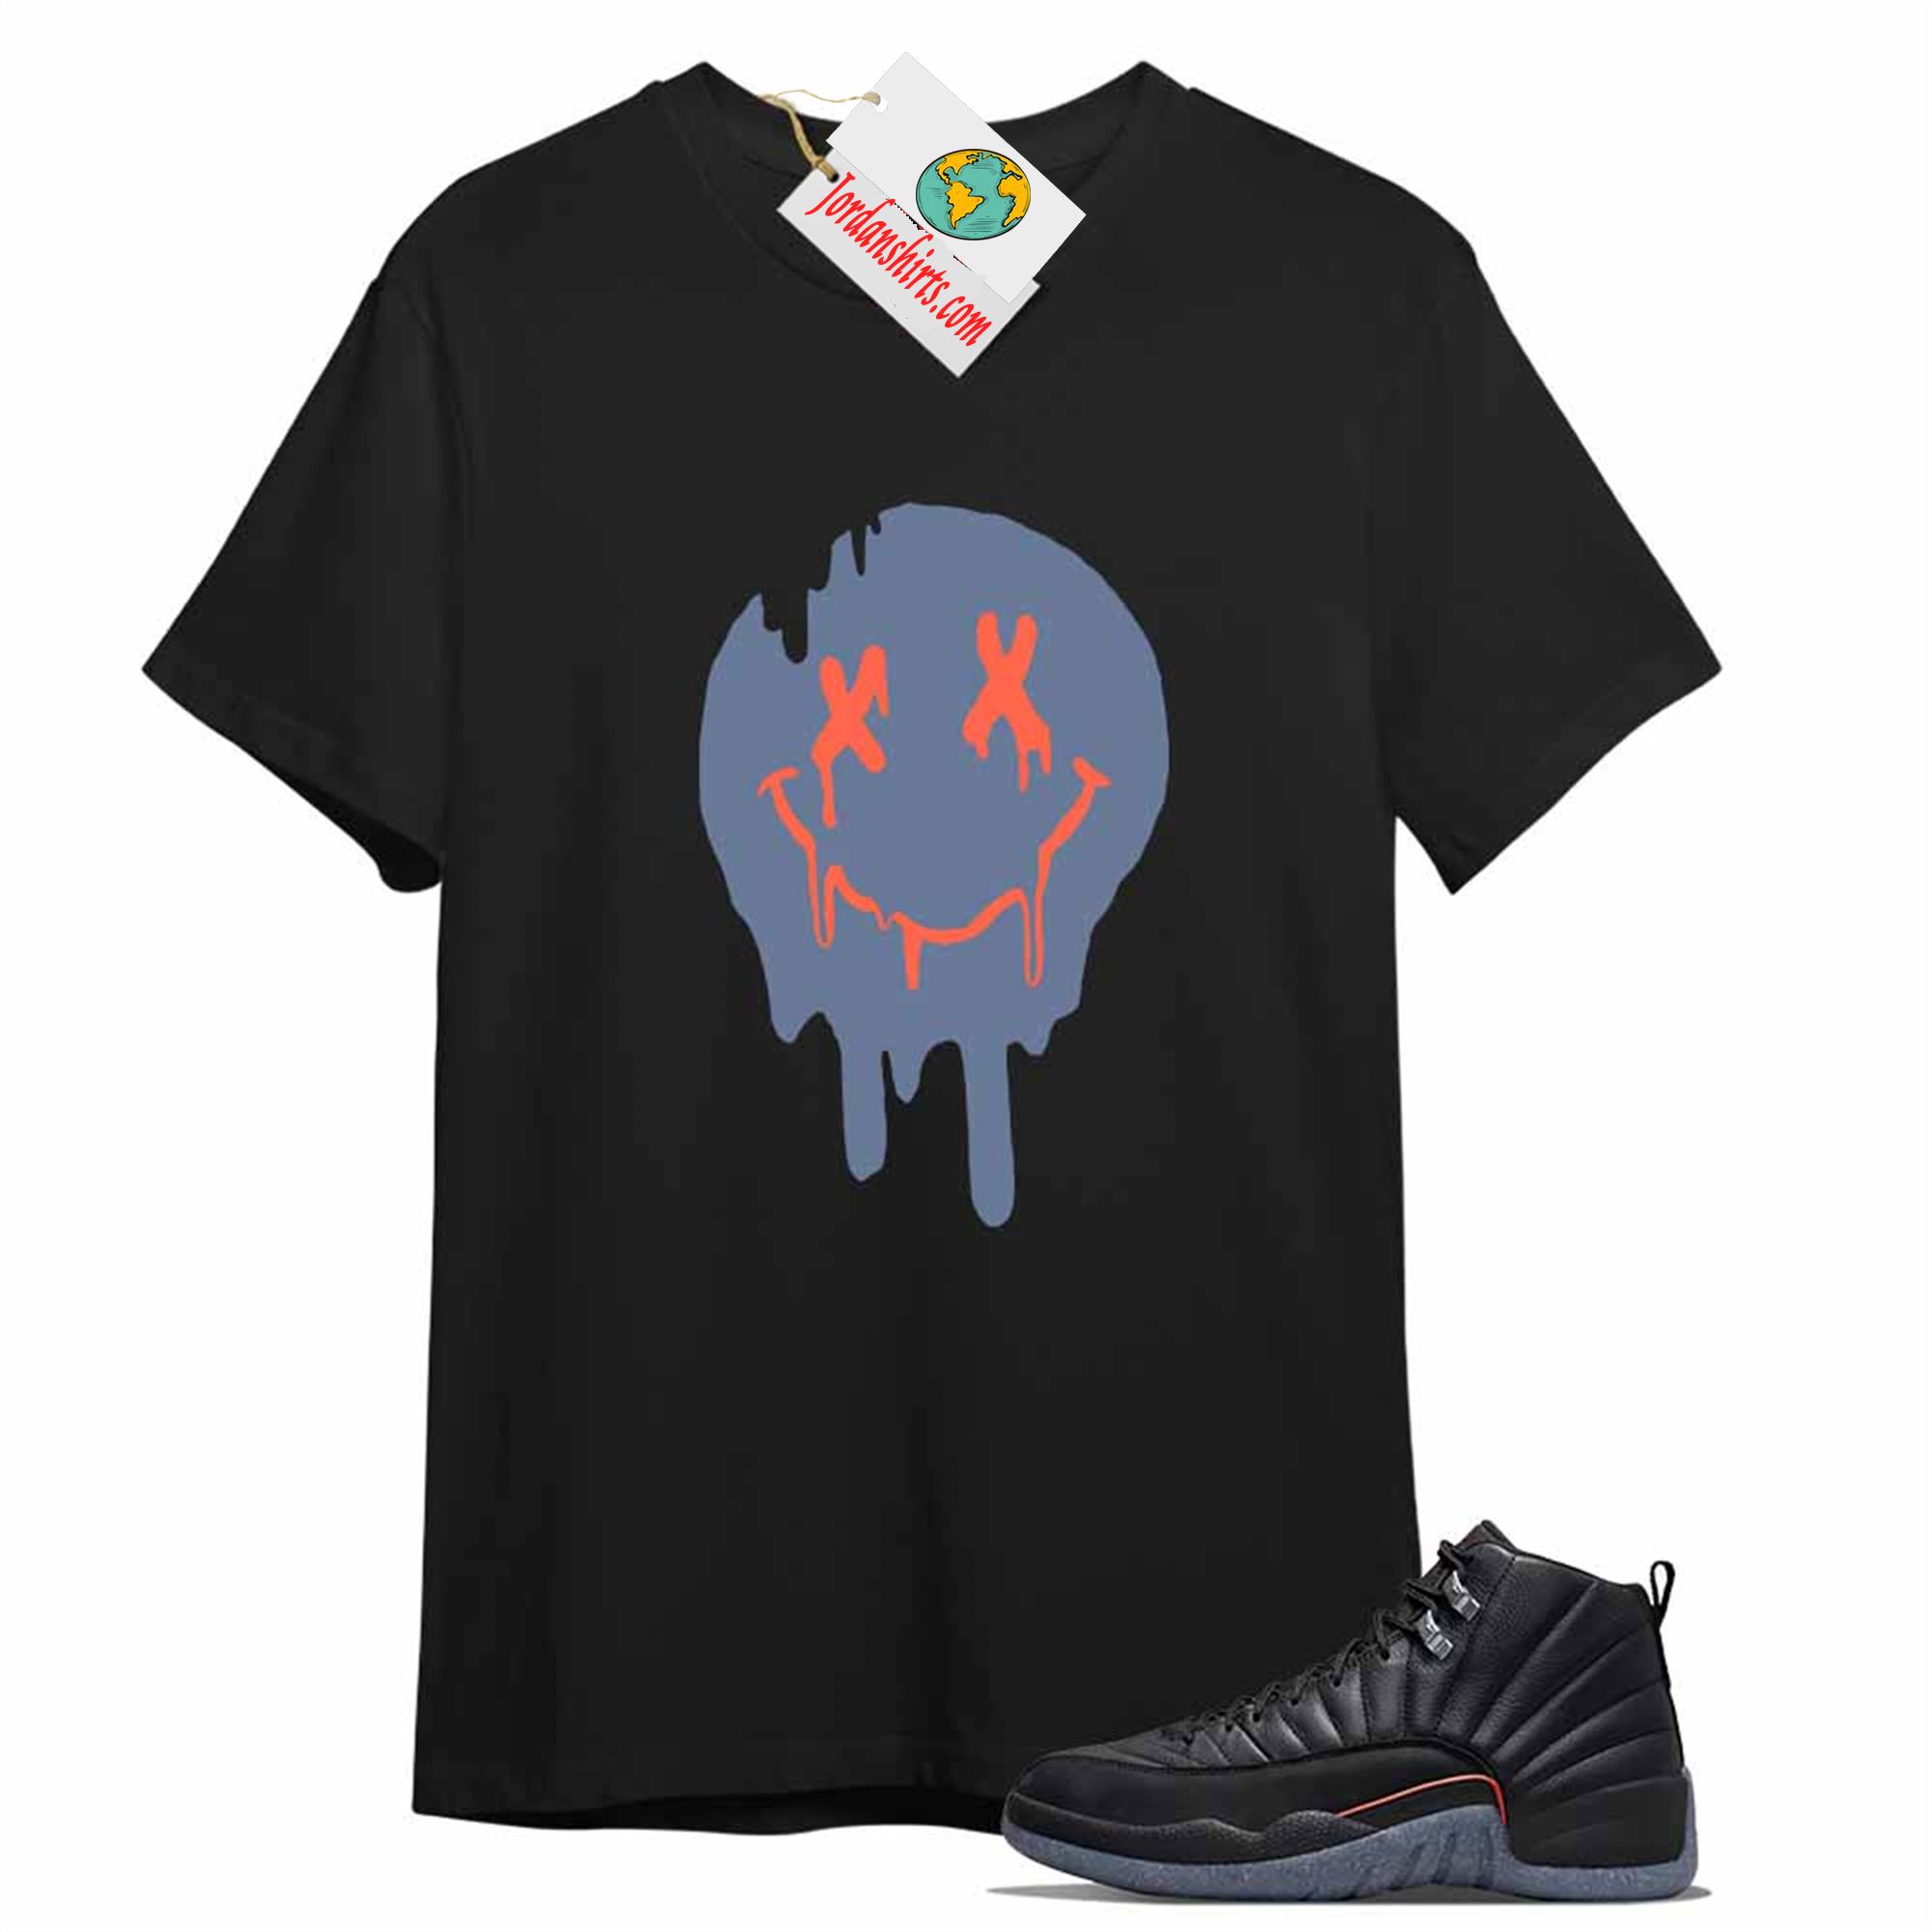 Jordan 12 Shirt, Happy Face Dripping Black T-shirt Air Jordan 12 Utility Grind 12s Size Up To 5xl